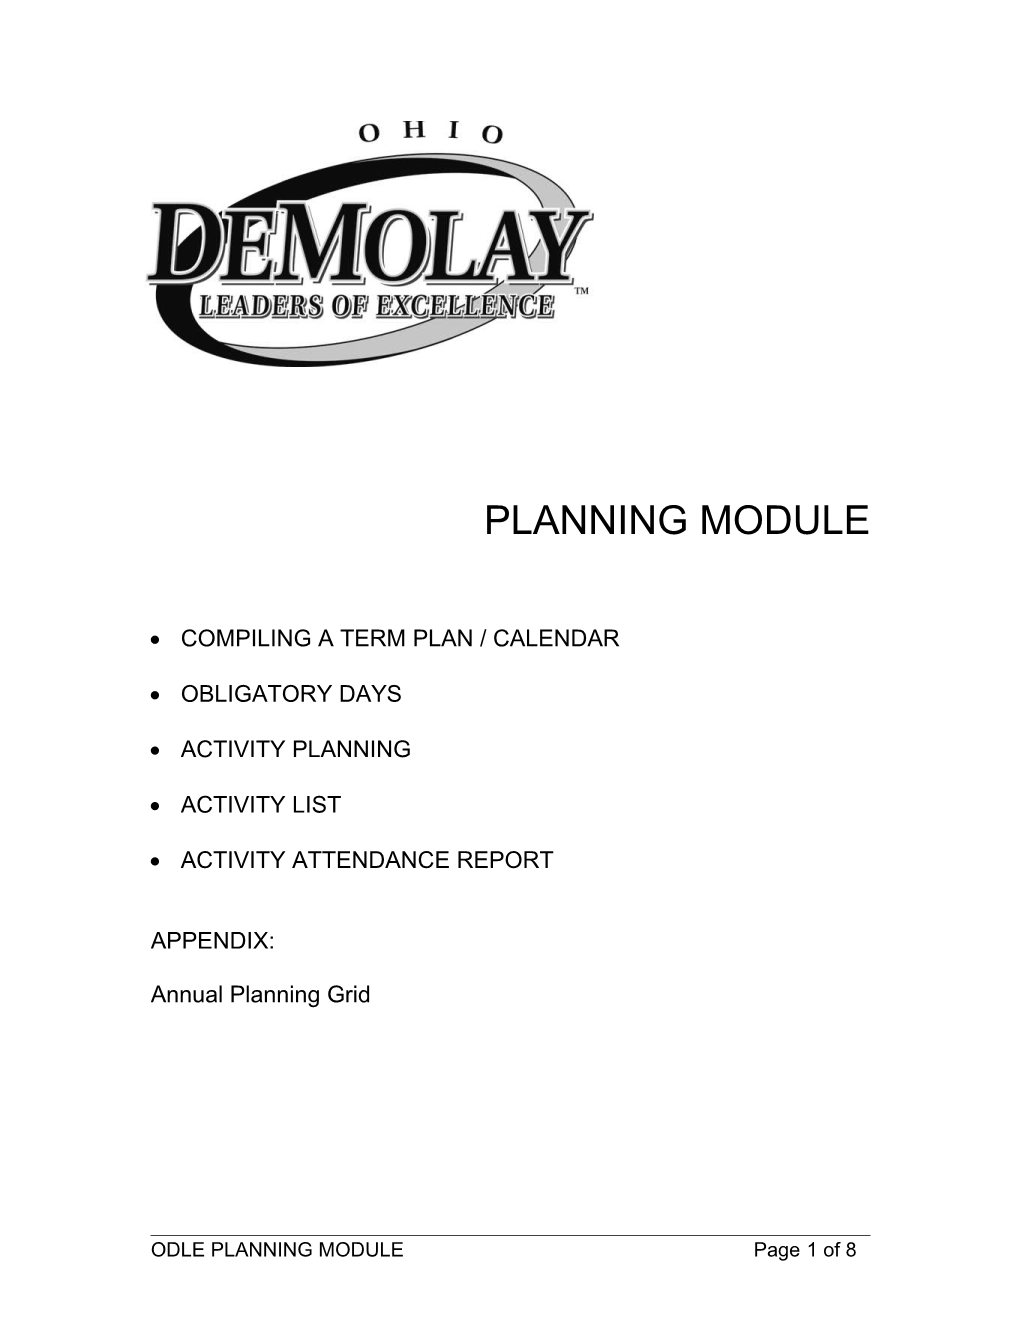 Planning Module Compiling a Term Plan / Calendar